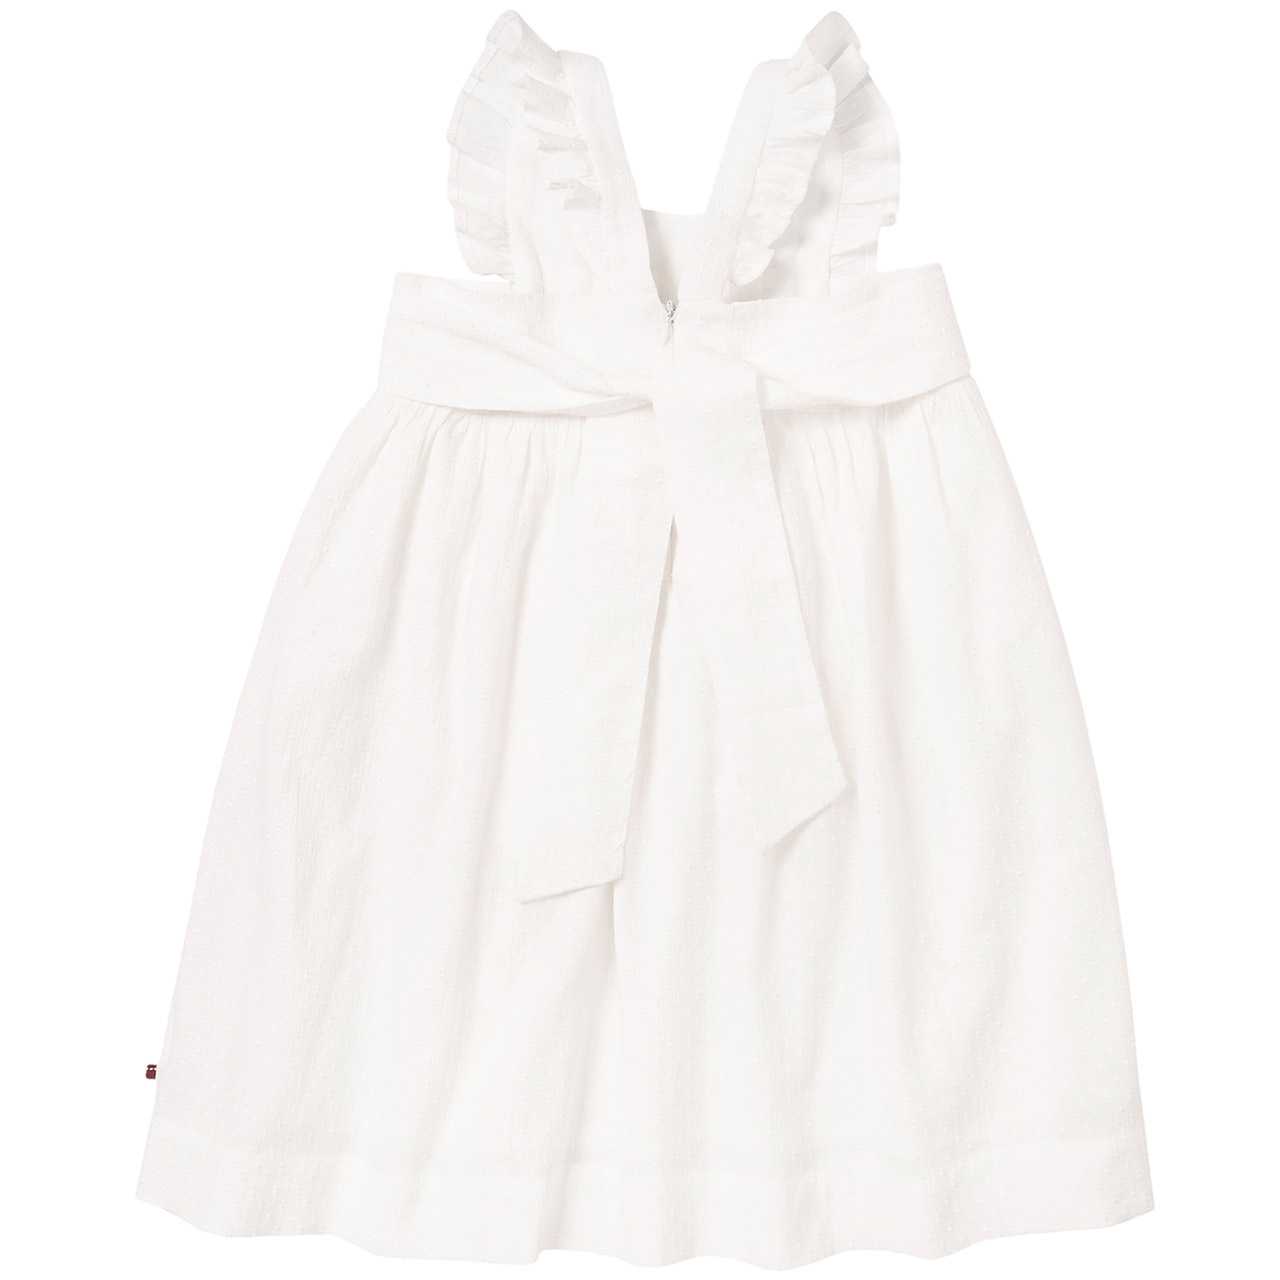 Elegantes Kleid ärmellos weiß